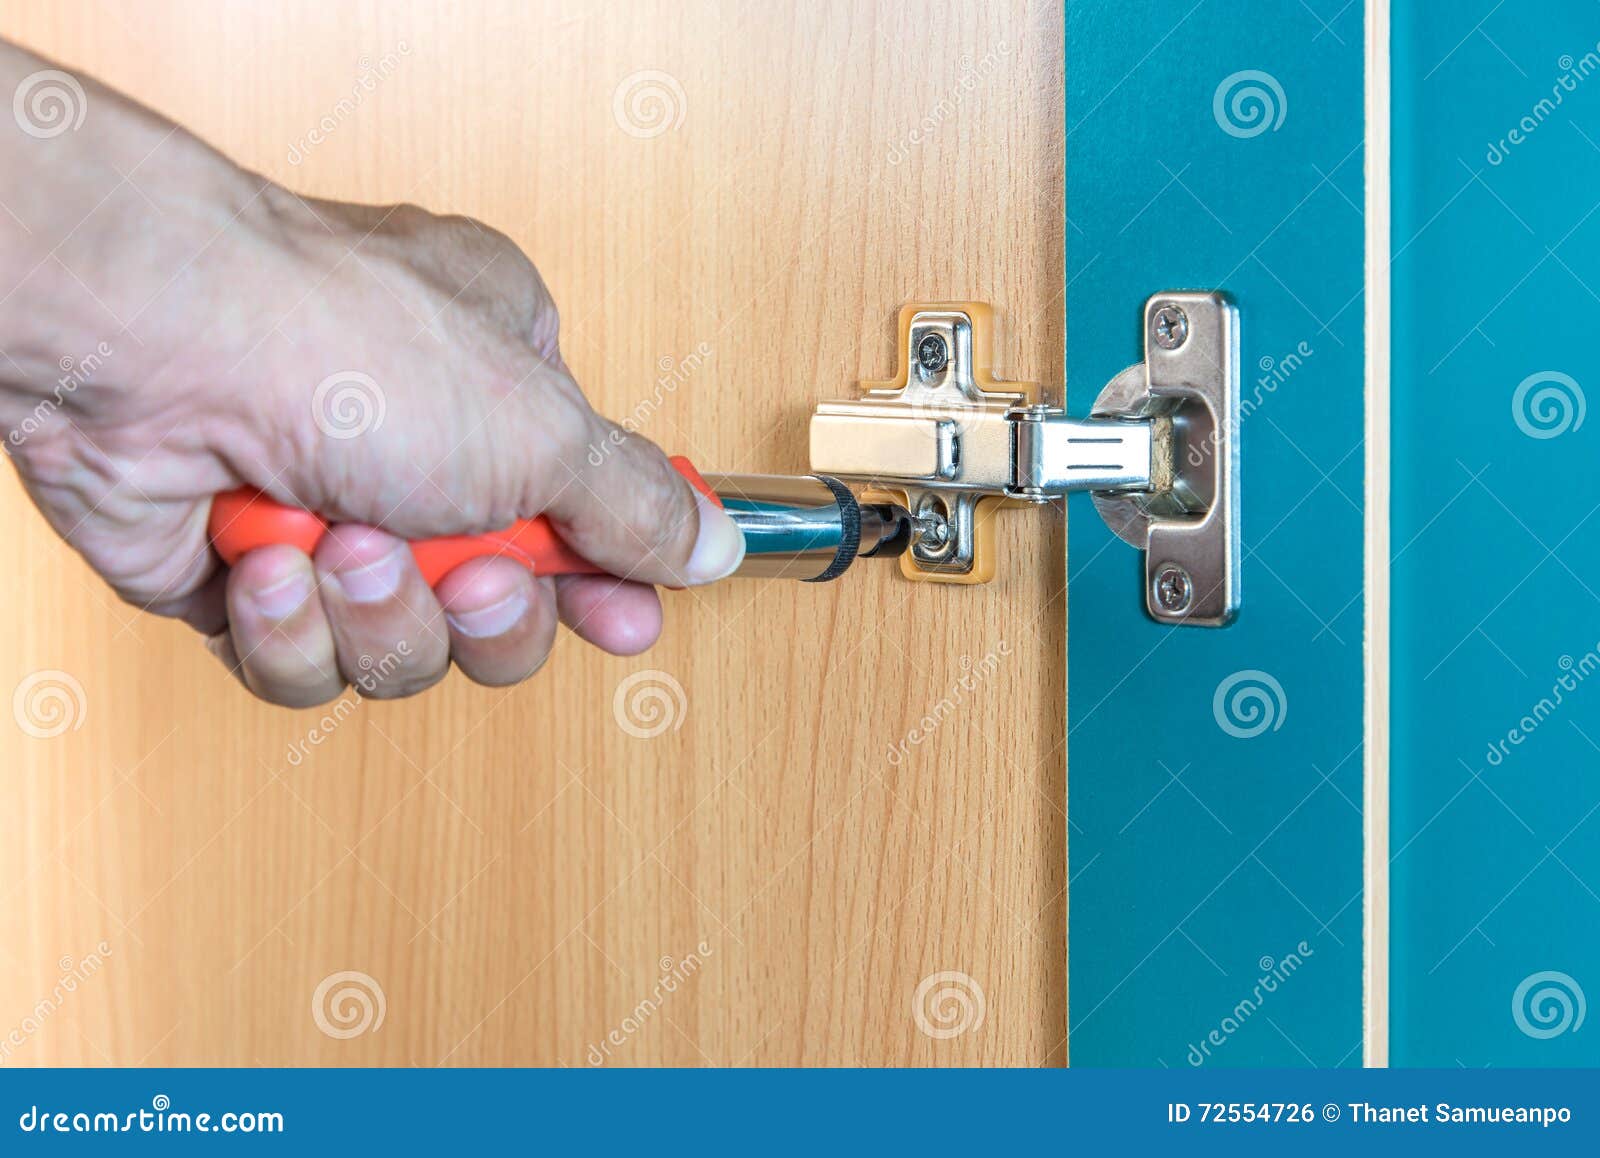 Fixing Cabinet Door Hinge Using A Screwdriver Stock Photo Image